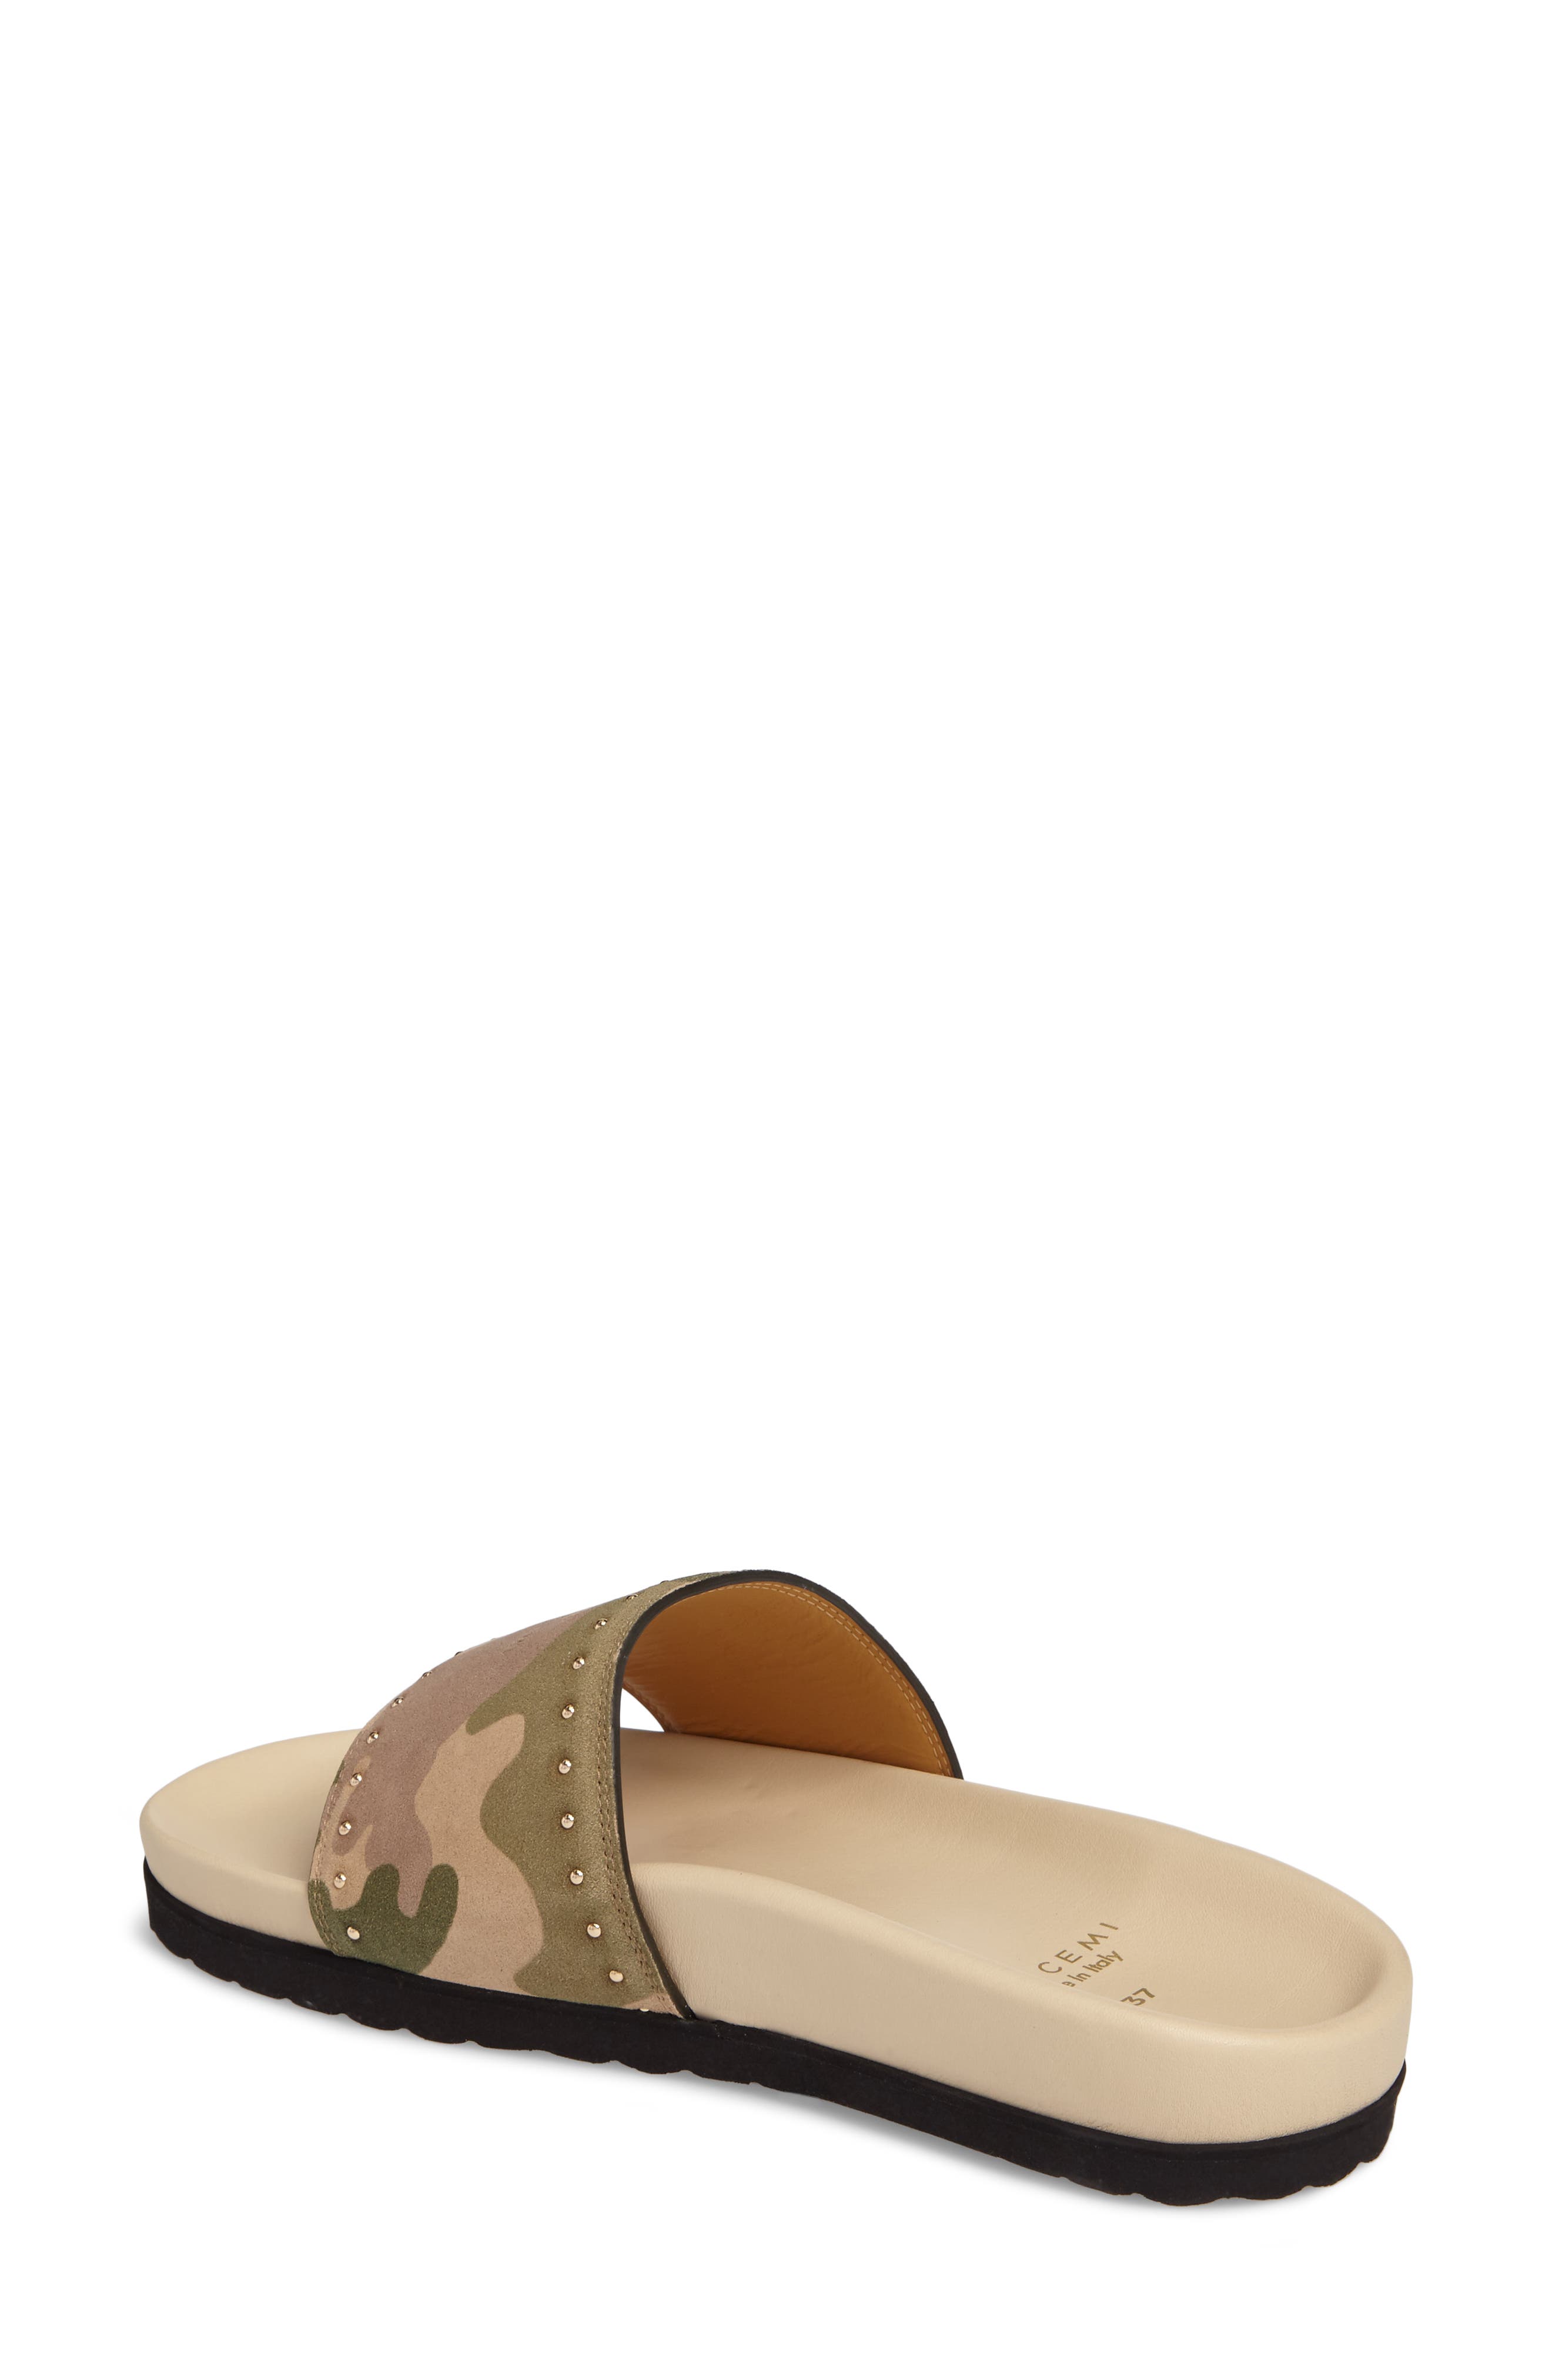 BUSCEMI Camouflage Studded Pool Slide Sandal, Camo Olive | ModeSens